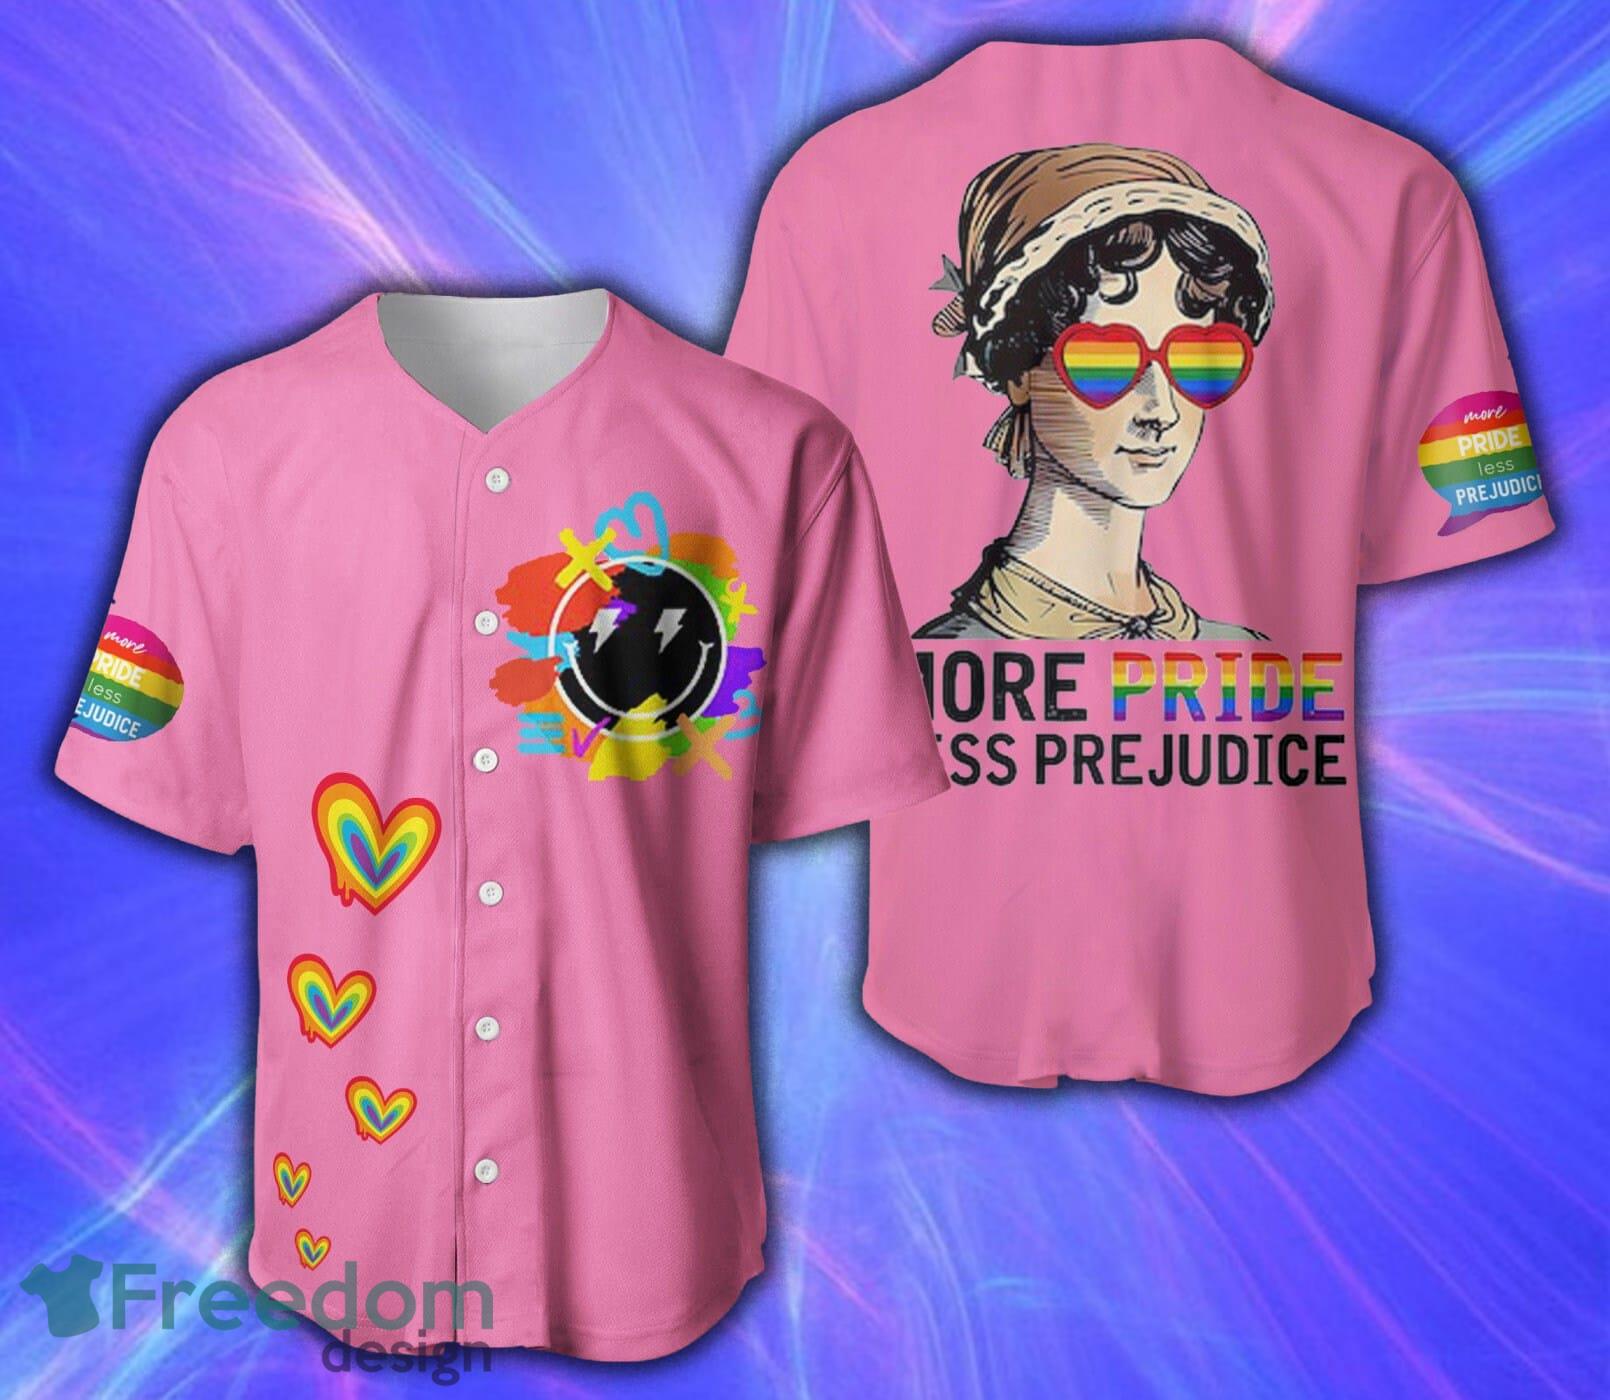 Michael Myers Baseball Jersey Style 8 Shirt Gift For Men And Women -  Freedomdesign